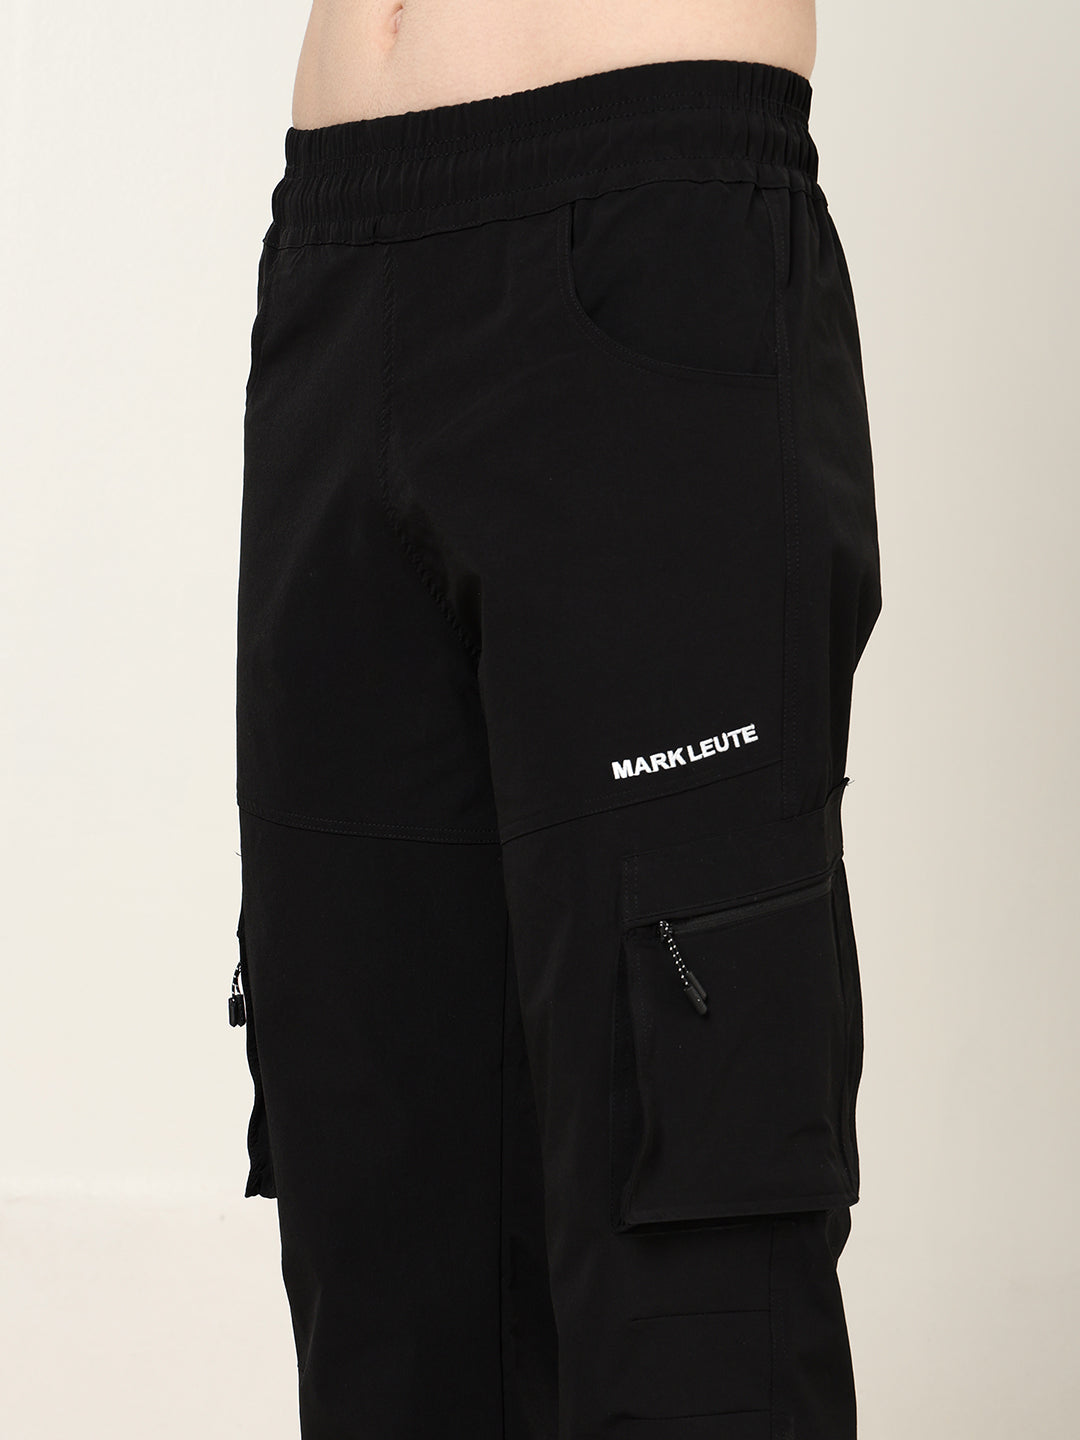 Black 5 Pocket Nylon Cargo Pants